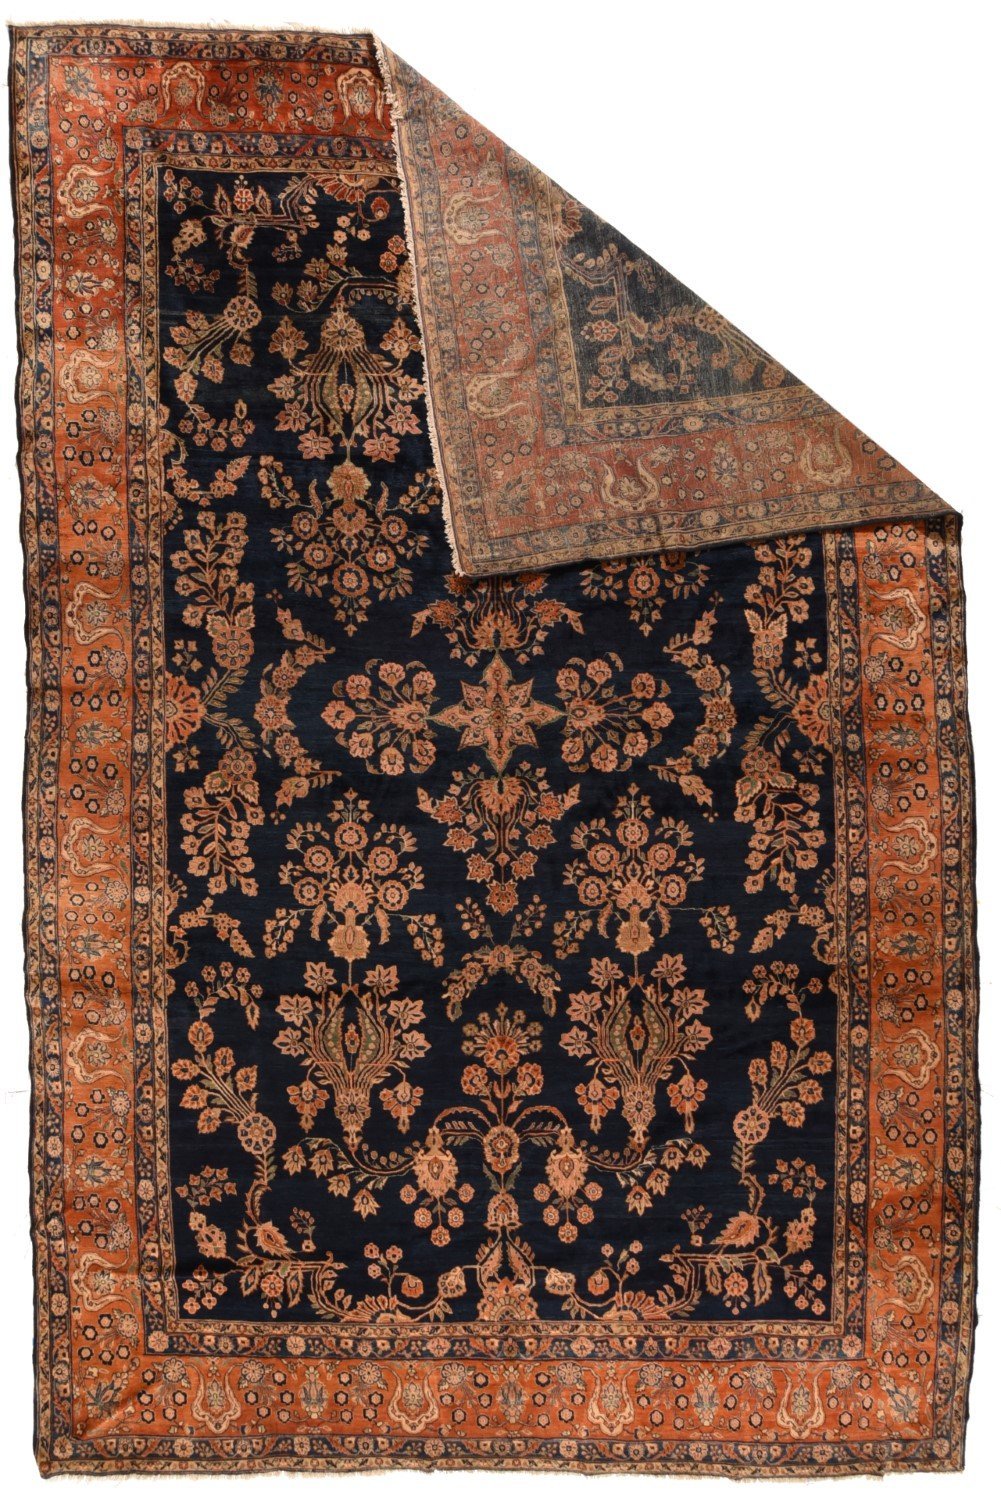 Antique Hand Made Persian Rug